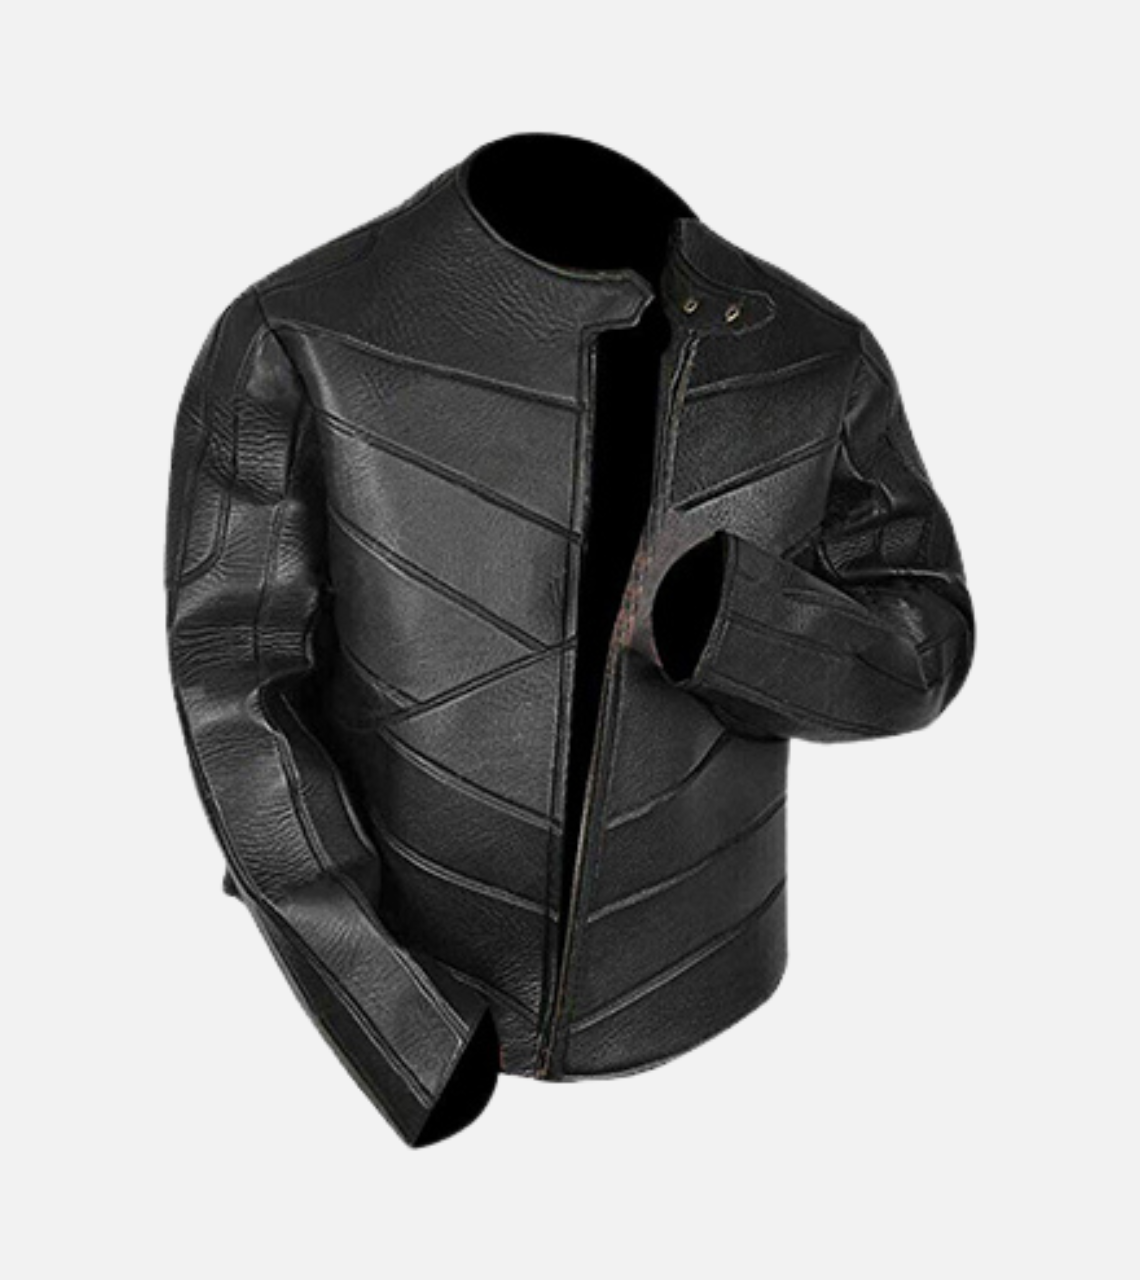 Rigid Biker Leather Jacket For Men's